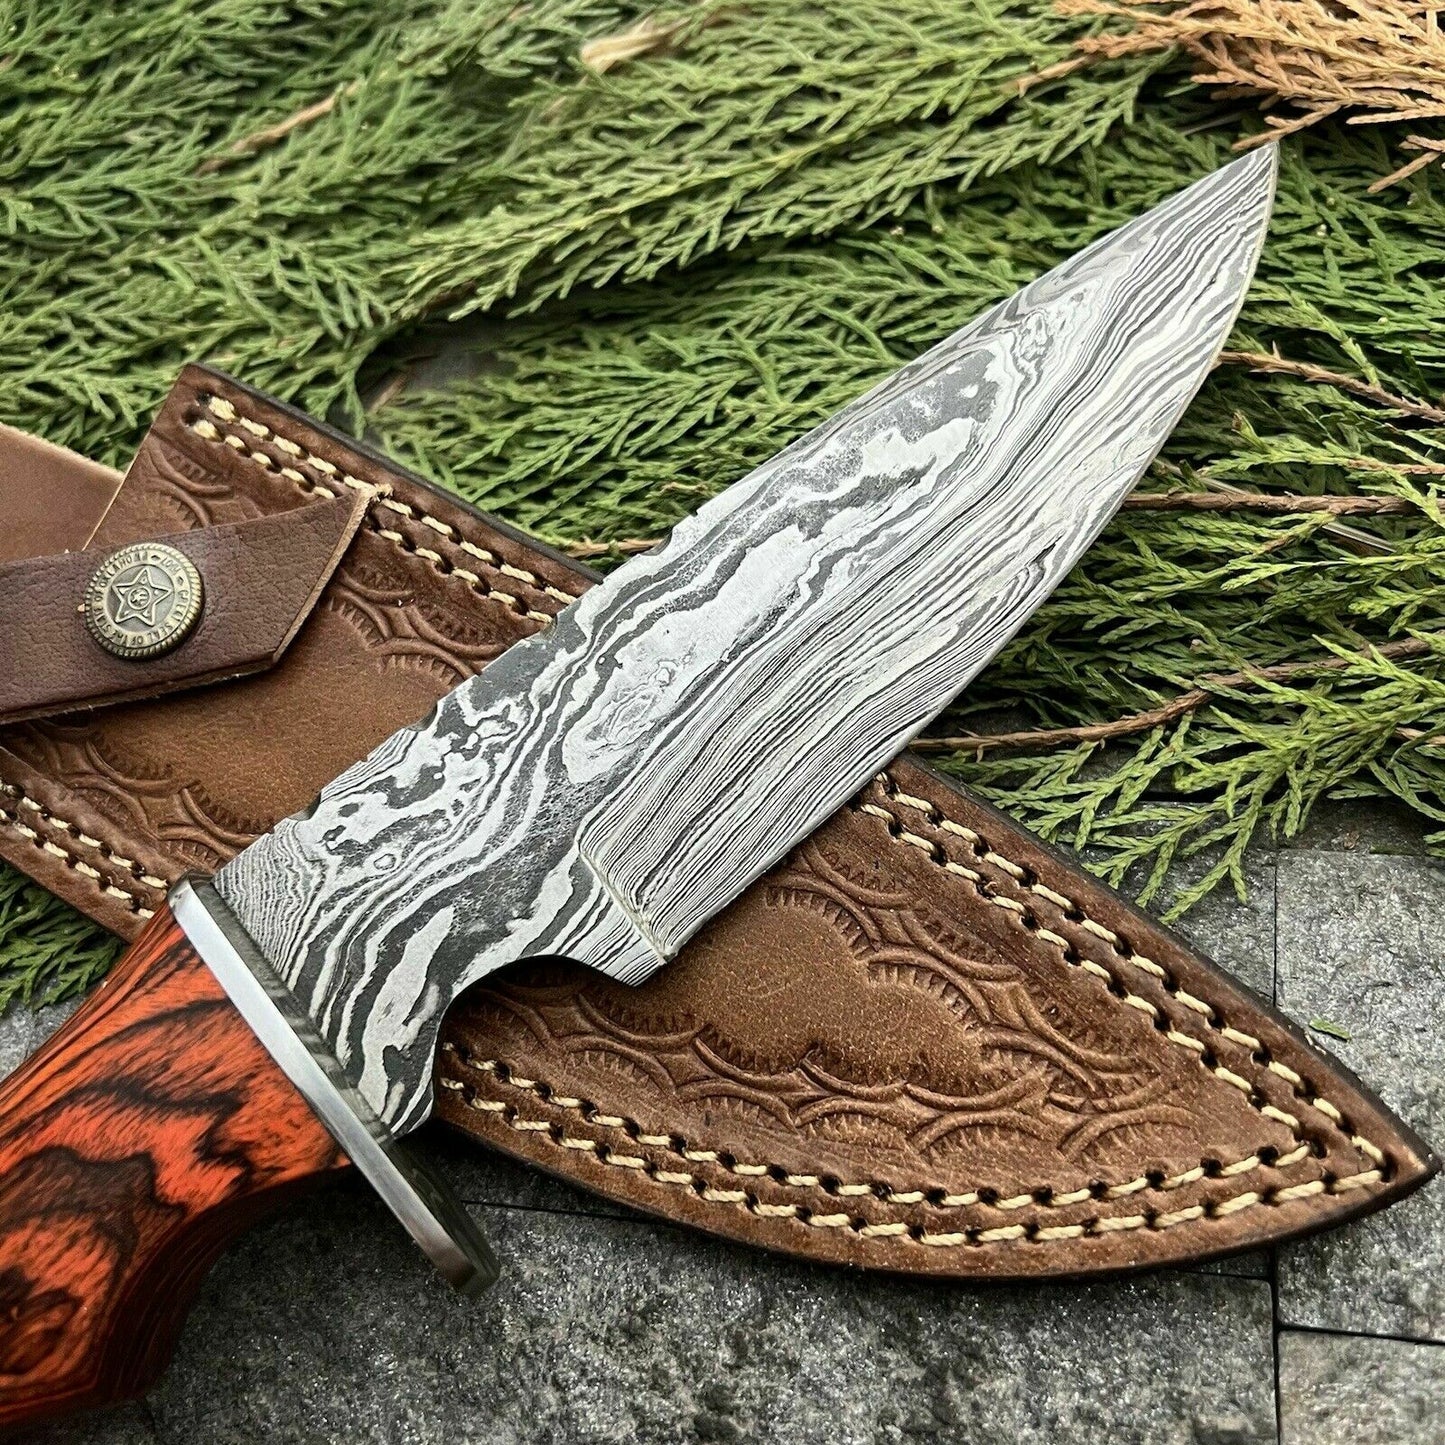 SHARD BLADE Custom Hand Forged Damascus Steel Hunting Bowie Knife W/Sheath